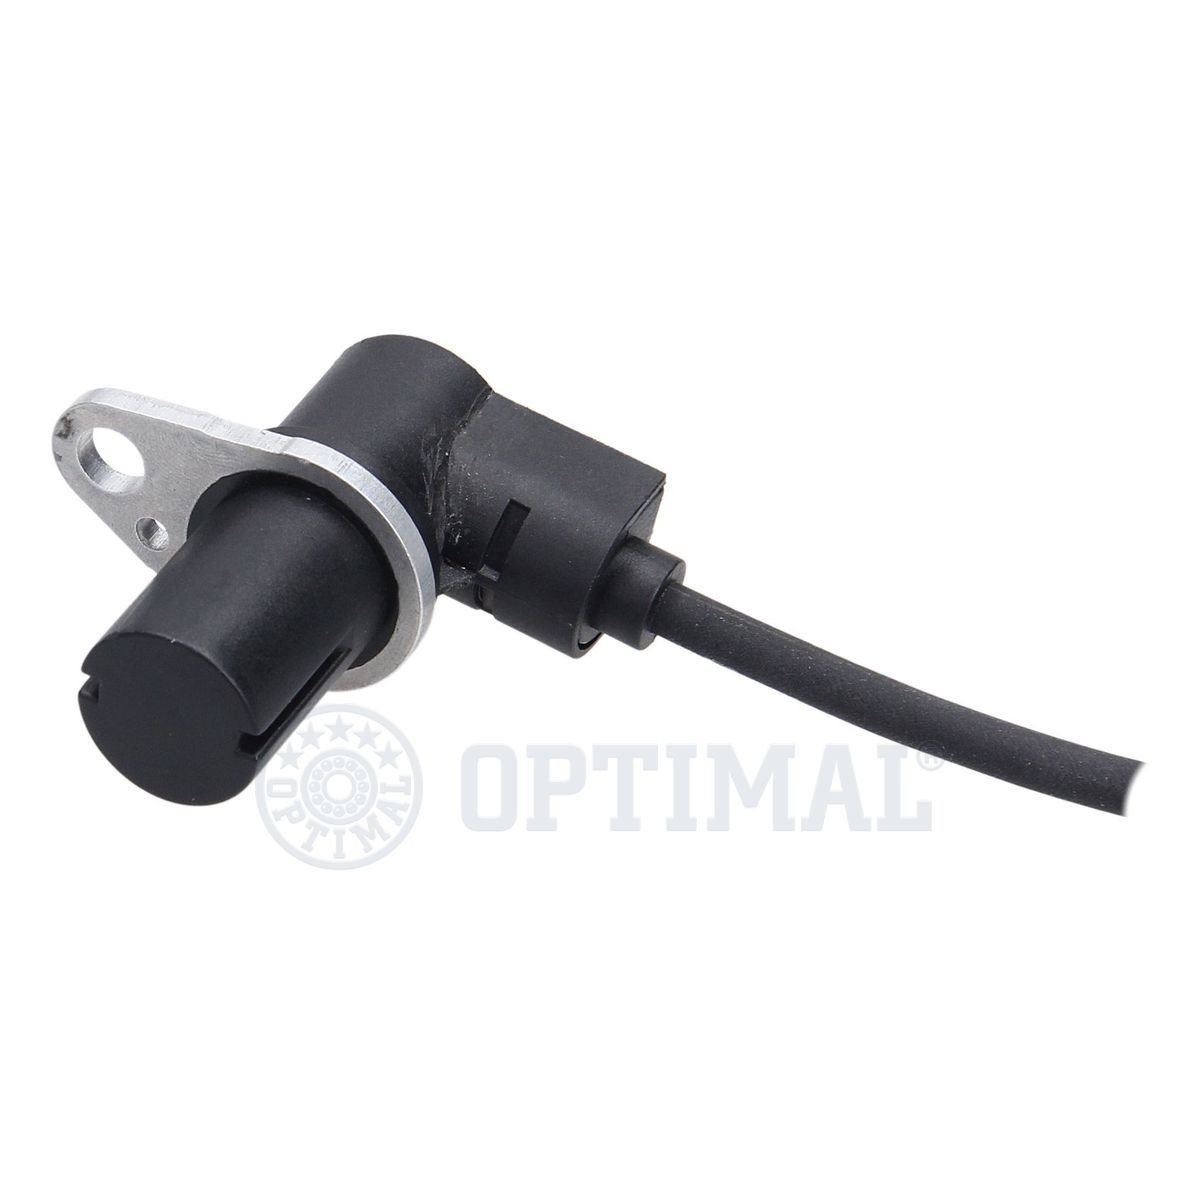 OPTIMAL 07-S001 RPM sensor 3-pin connector, Active sensor